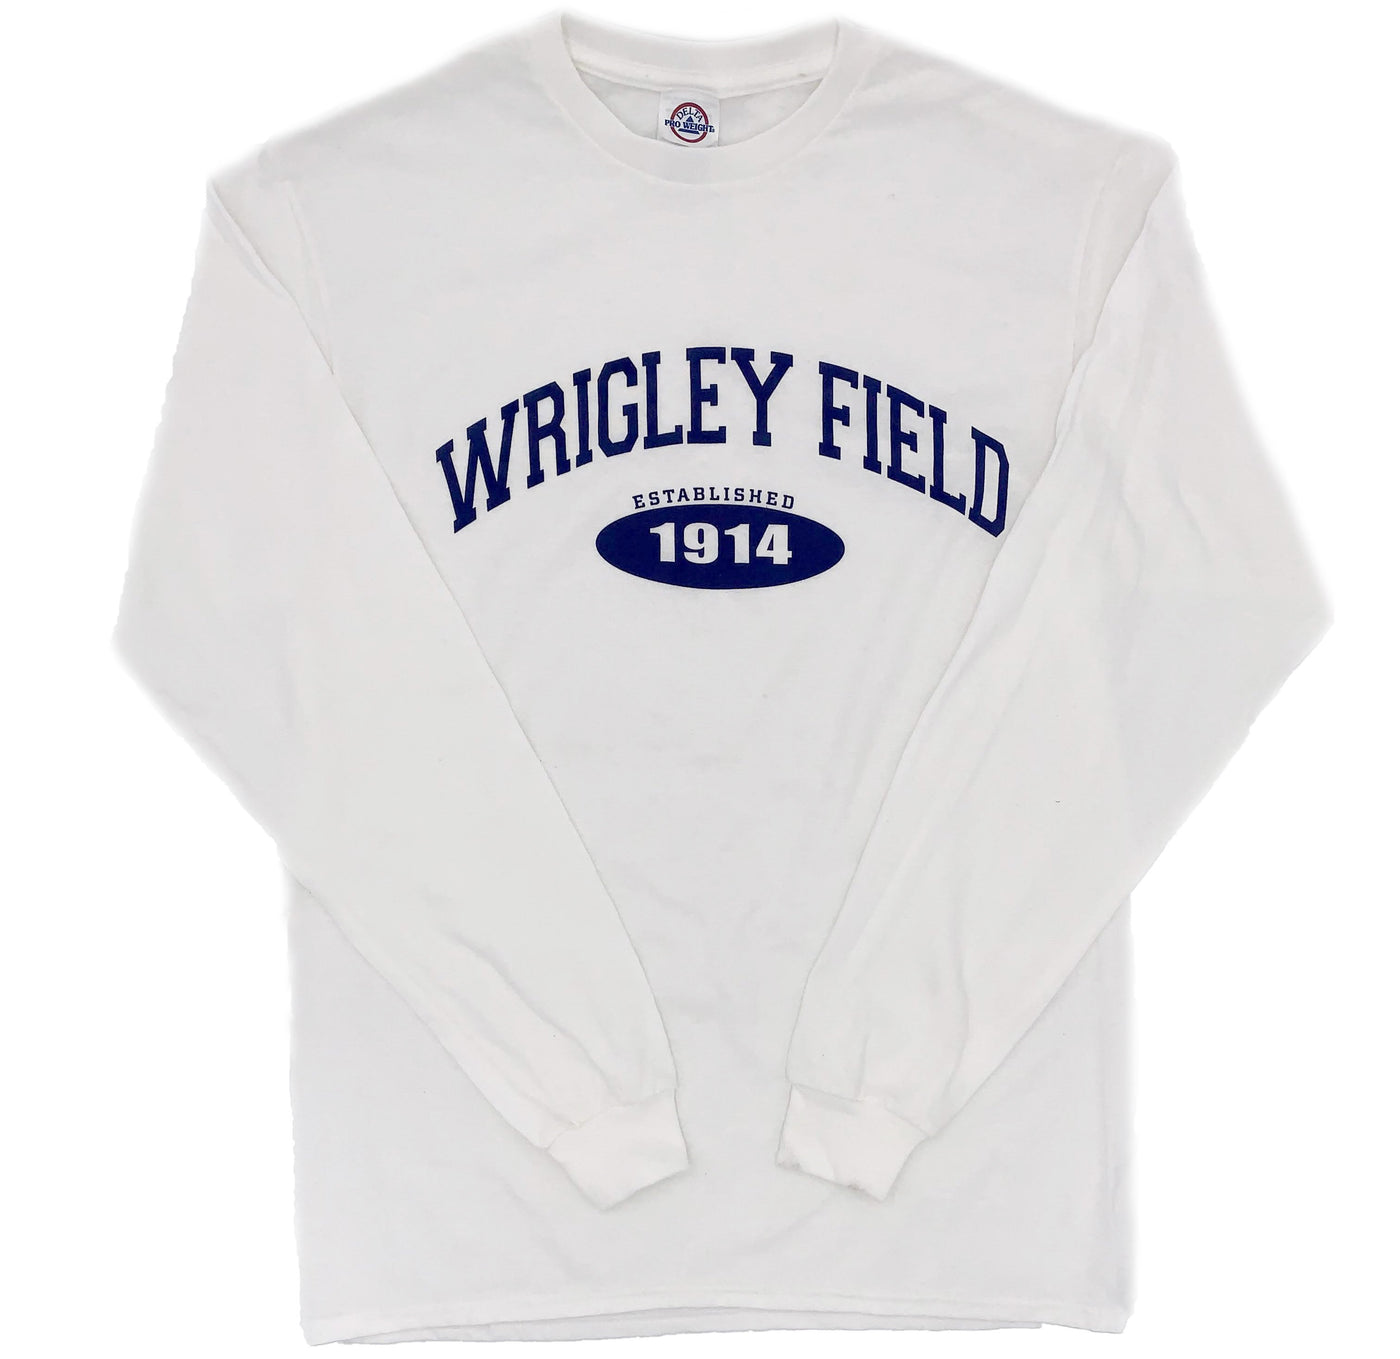 Wrigley Field Shirt